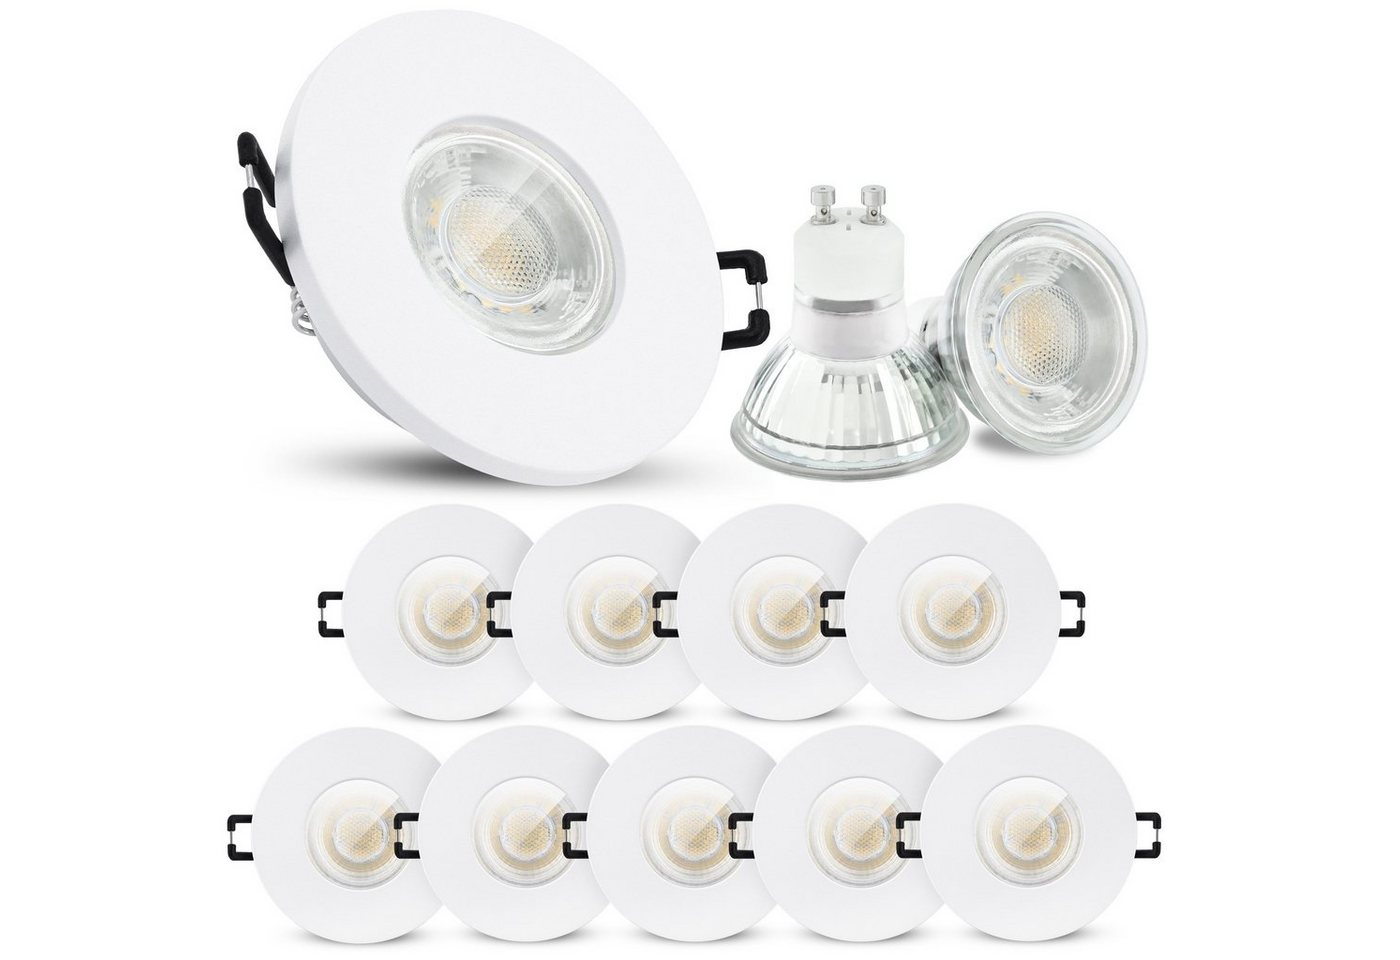 linovum LED Einbaustrahler 10er Set LED Einbaustrahler IP65 warmweiss GU10 2W 230V - Einbauspot, Leuchtmittel inklusive, Leuchtmittel inklusive von linovum